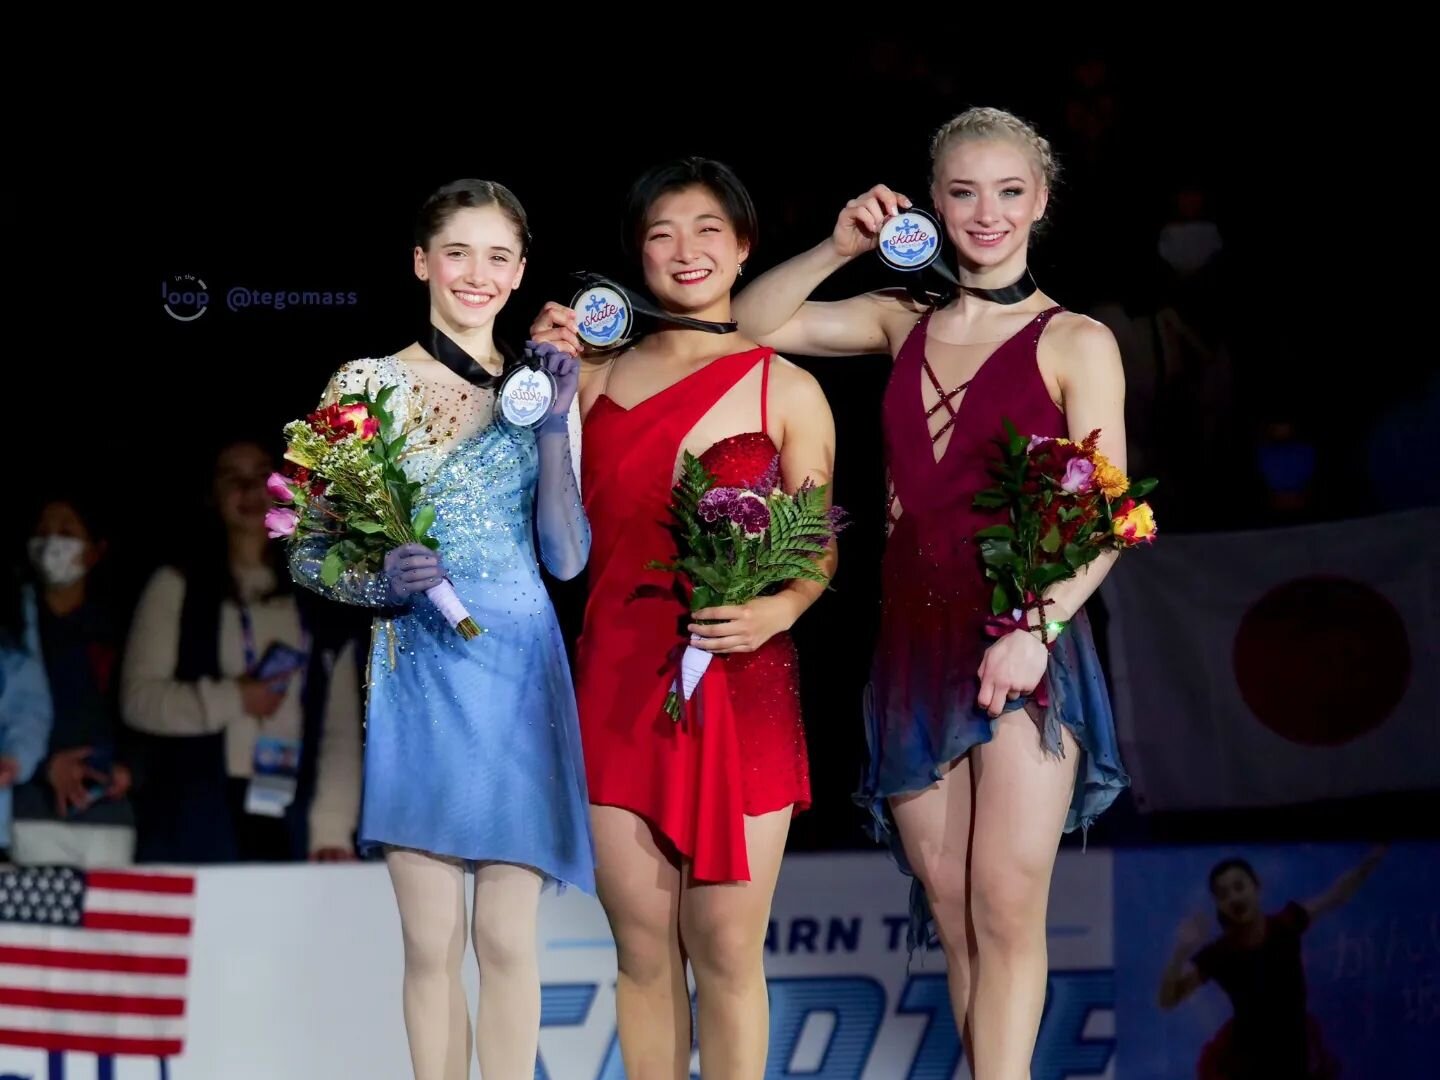 A happy happy podium!

🥇#KaoriSakamoto #坂本花織 🥈#IsabeauLevito 
🥉 #AmberGlenn 
📸 @gabietab
{#SkAm22 #SkateAmerica}